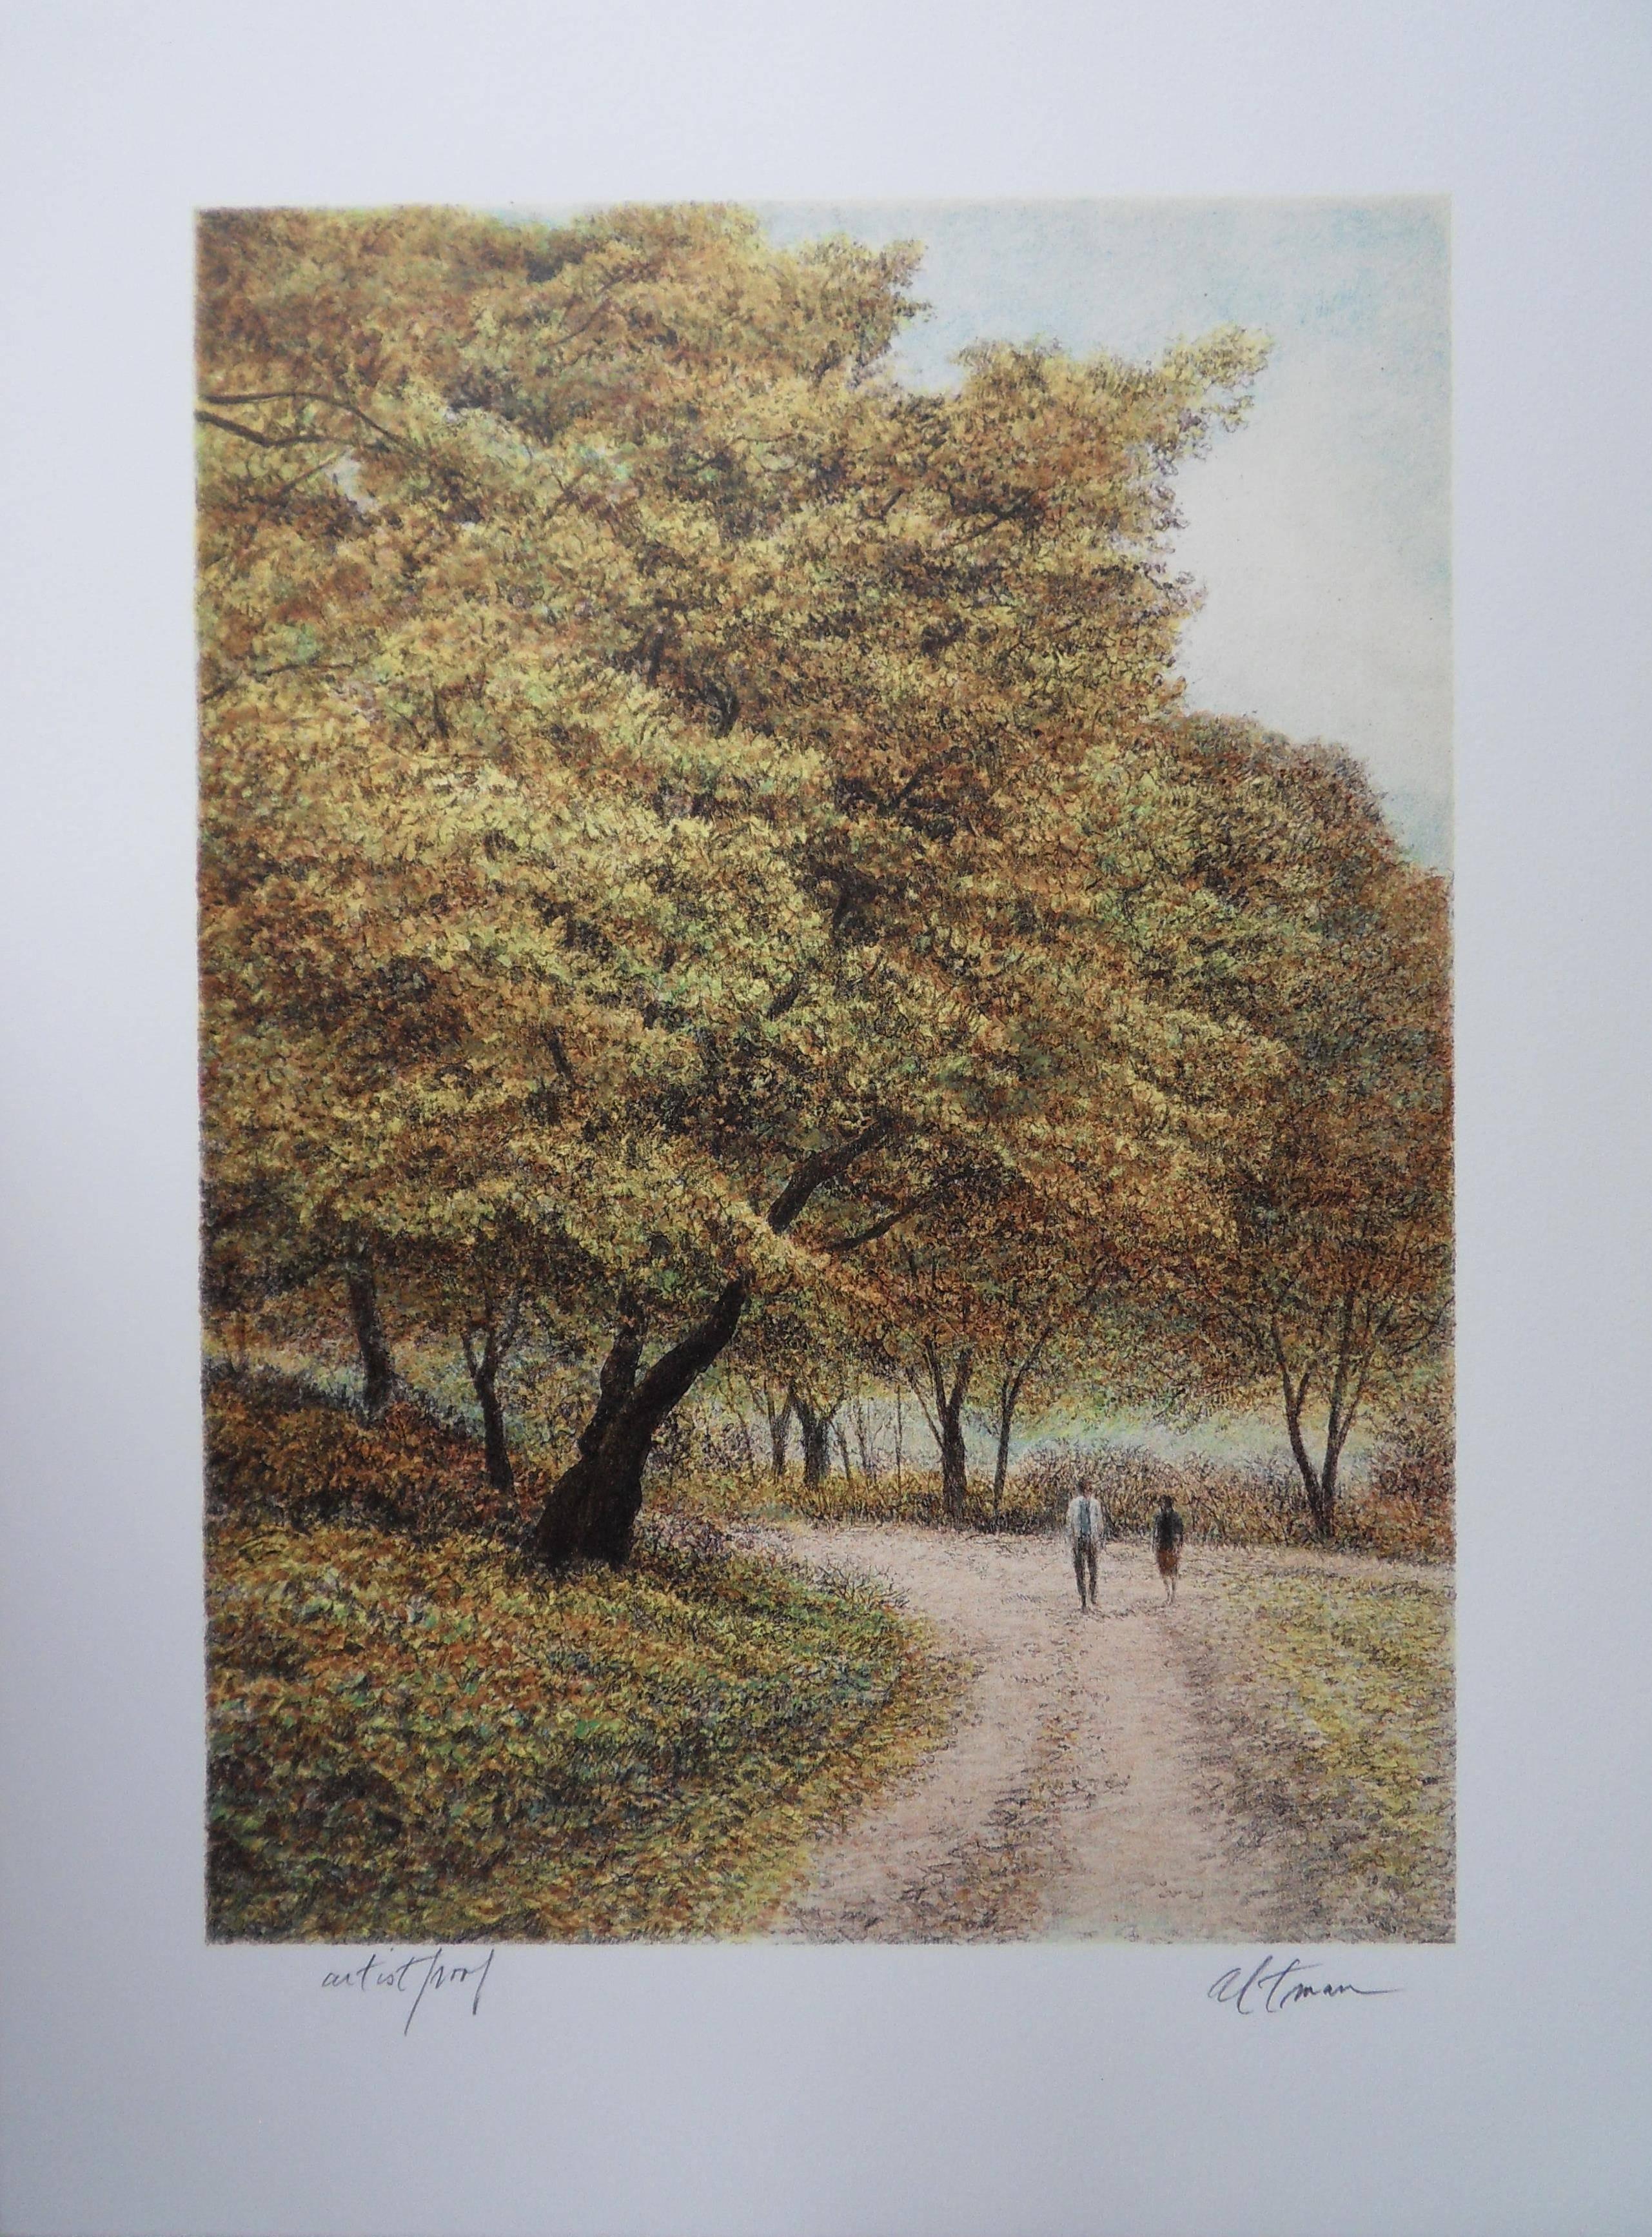 Harold Altman Figurative Print - Central Park Views : Fall - Original handsigned lithograph